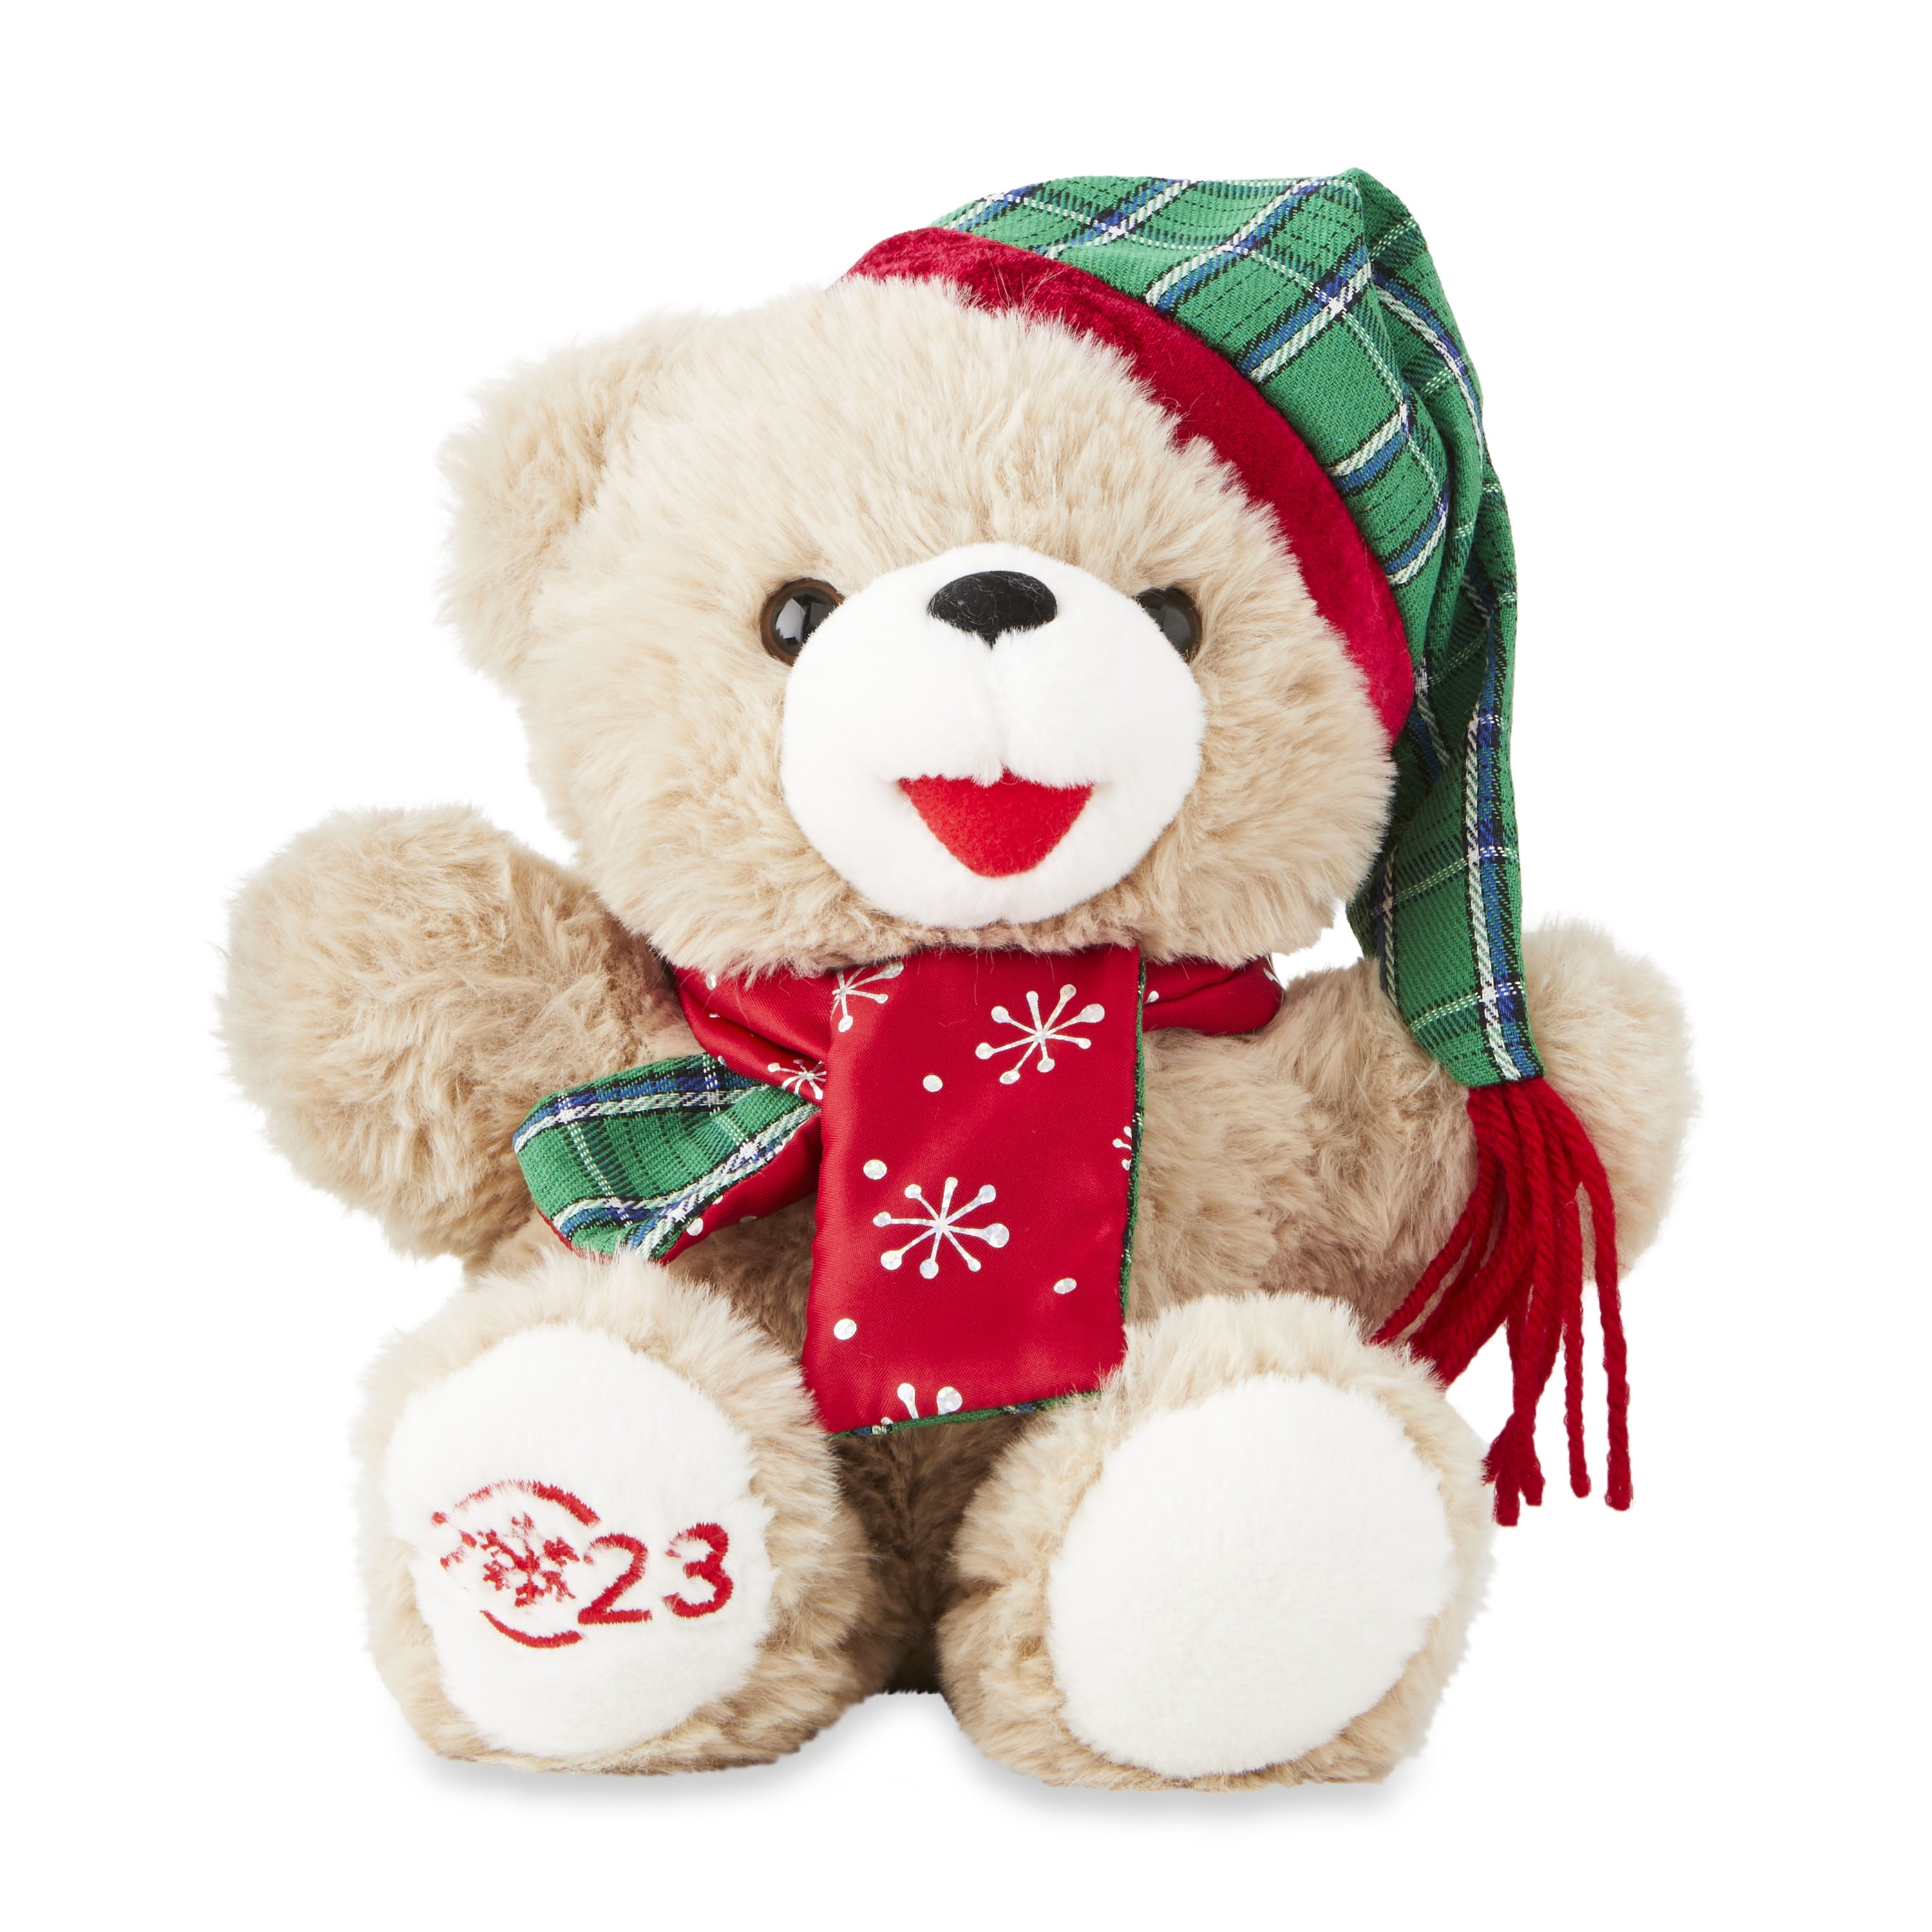 2023 WalMART CHRISTMAS Snowflake TEDDY BEAR White Boy 20 Ski outfit Brand  New